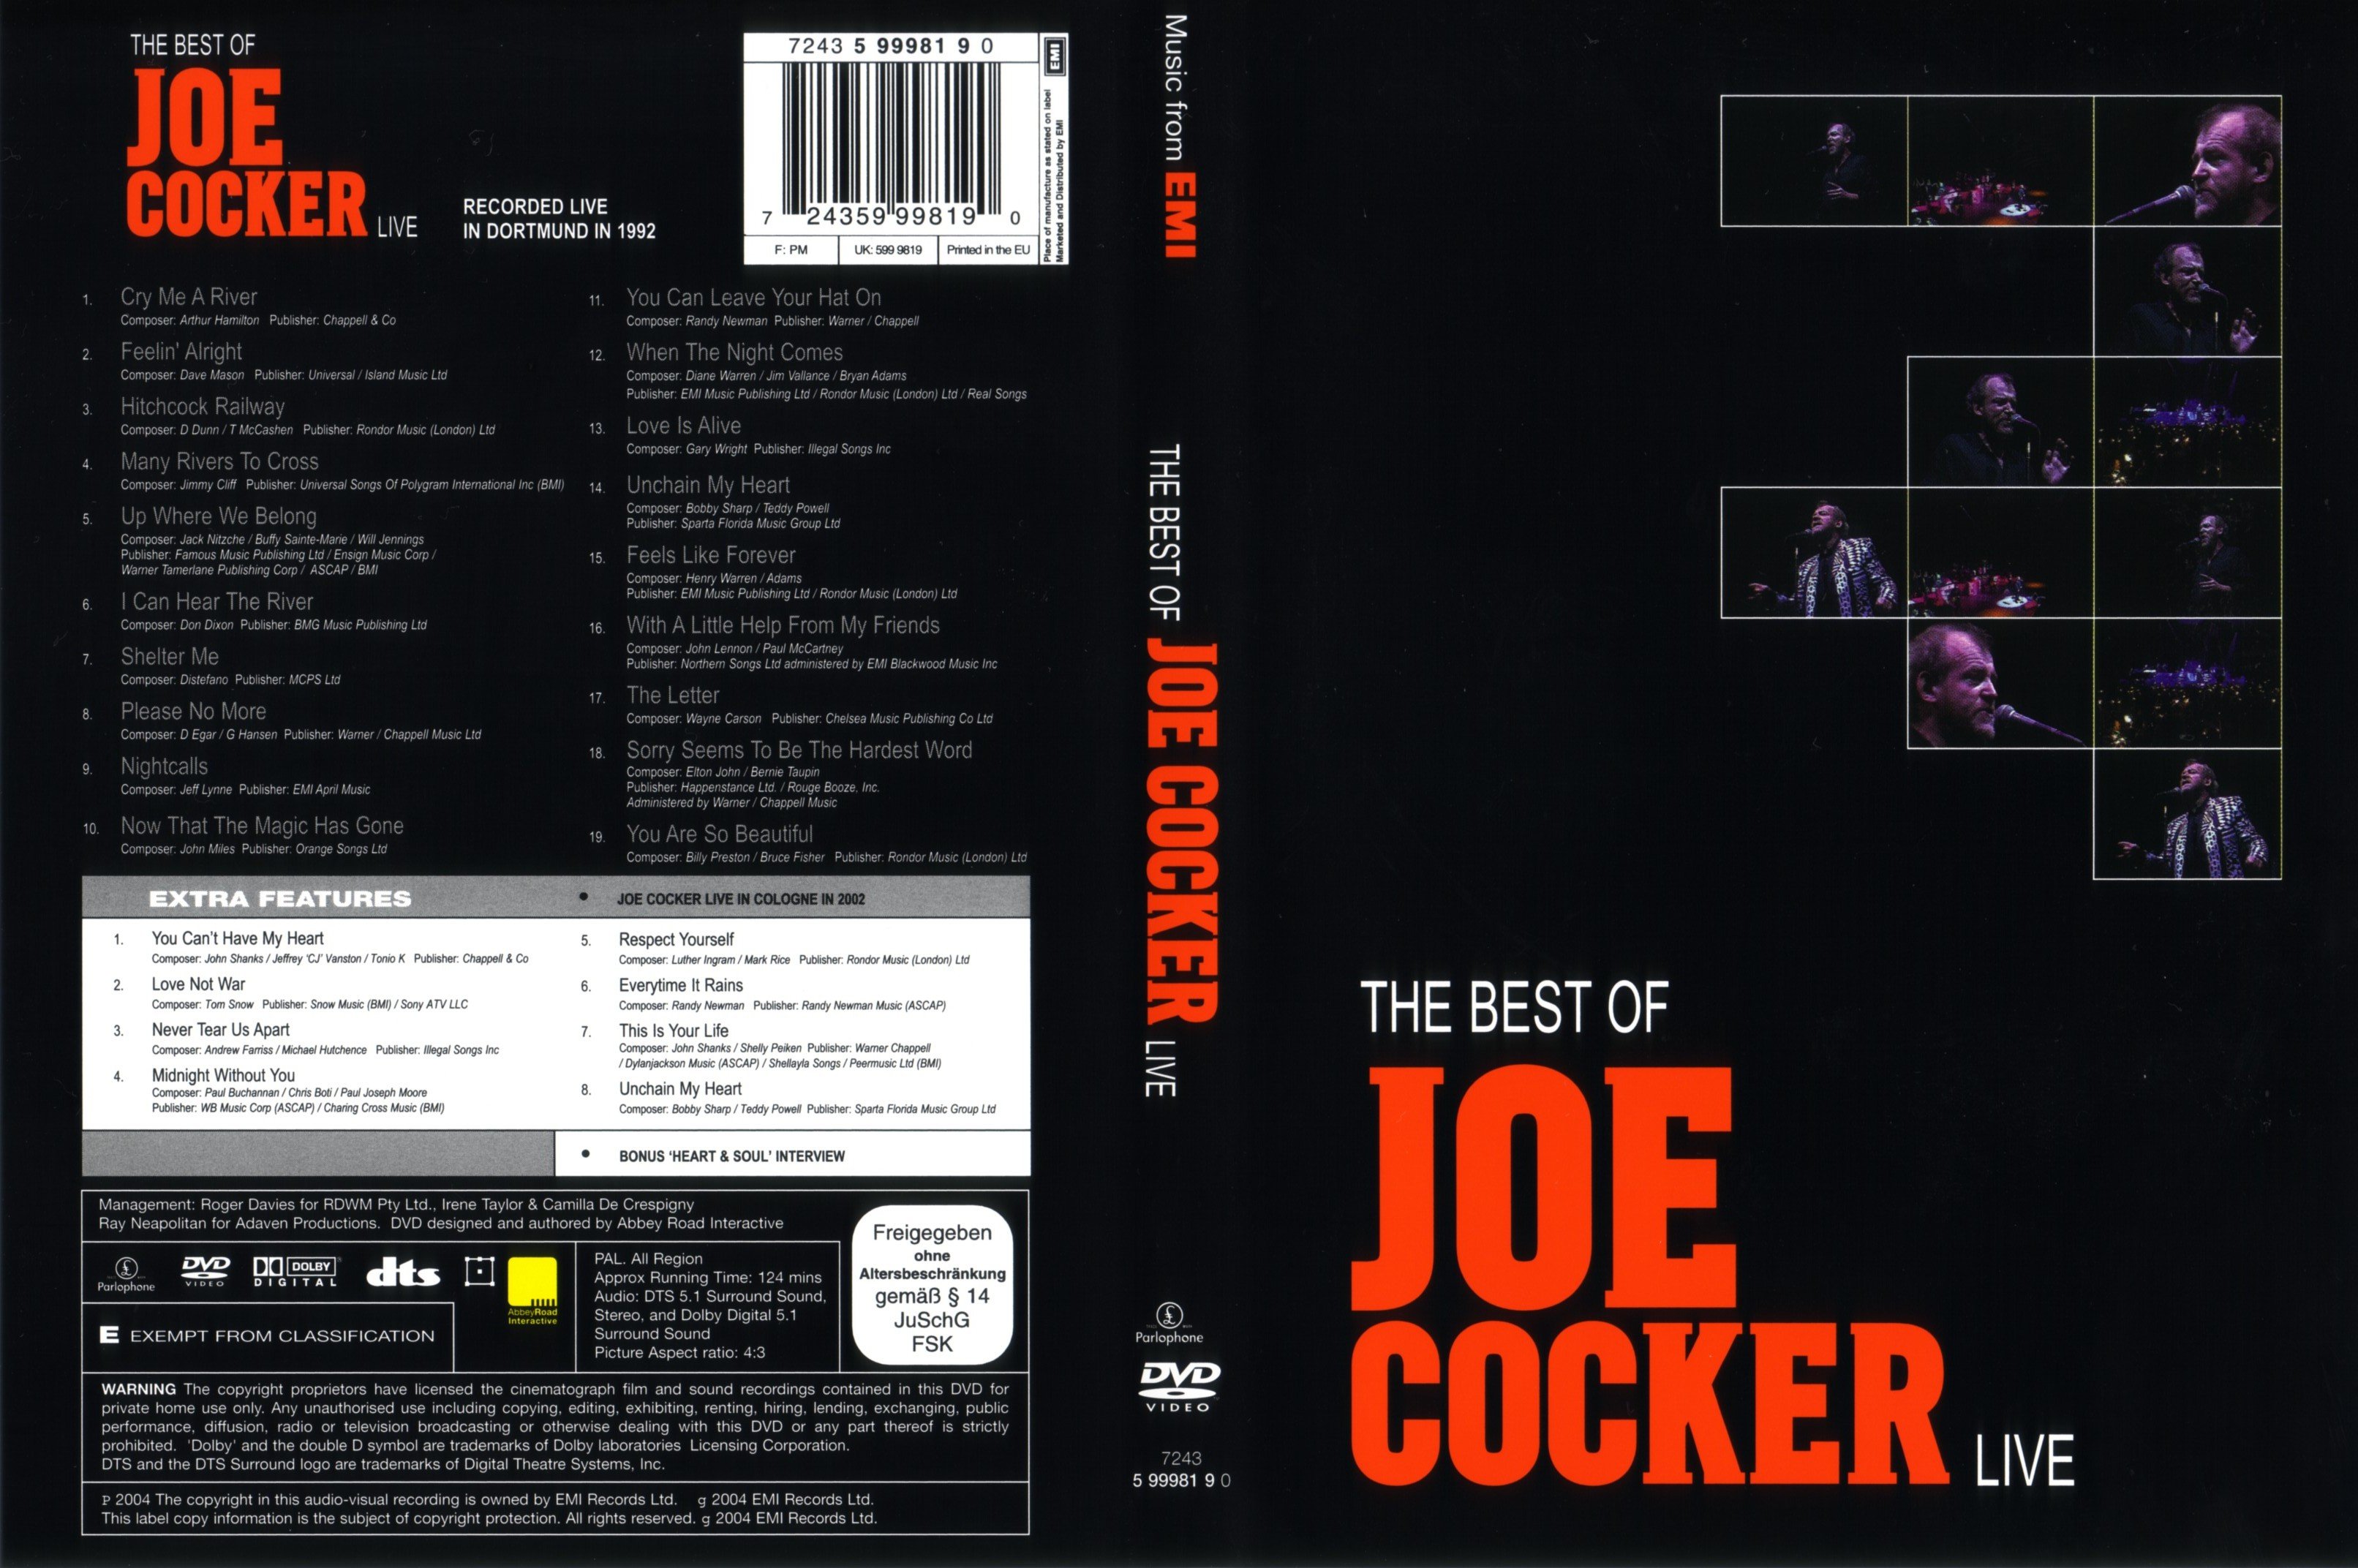 Jaquette DVD Joe Cocker The best of live